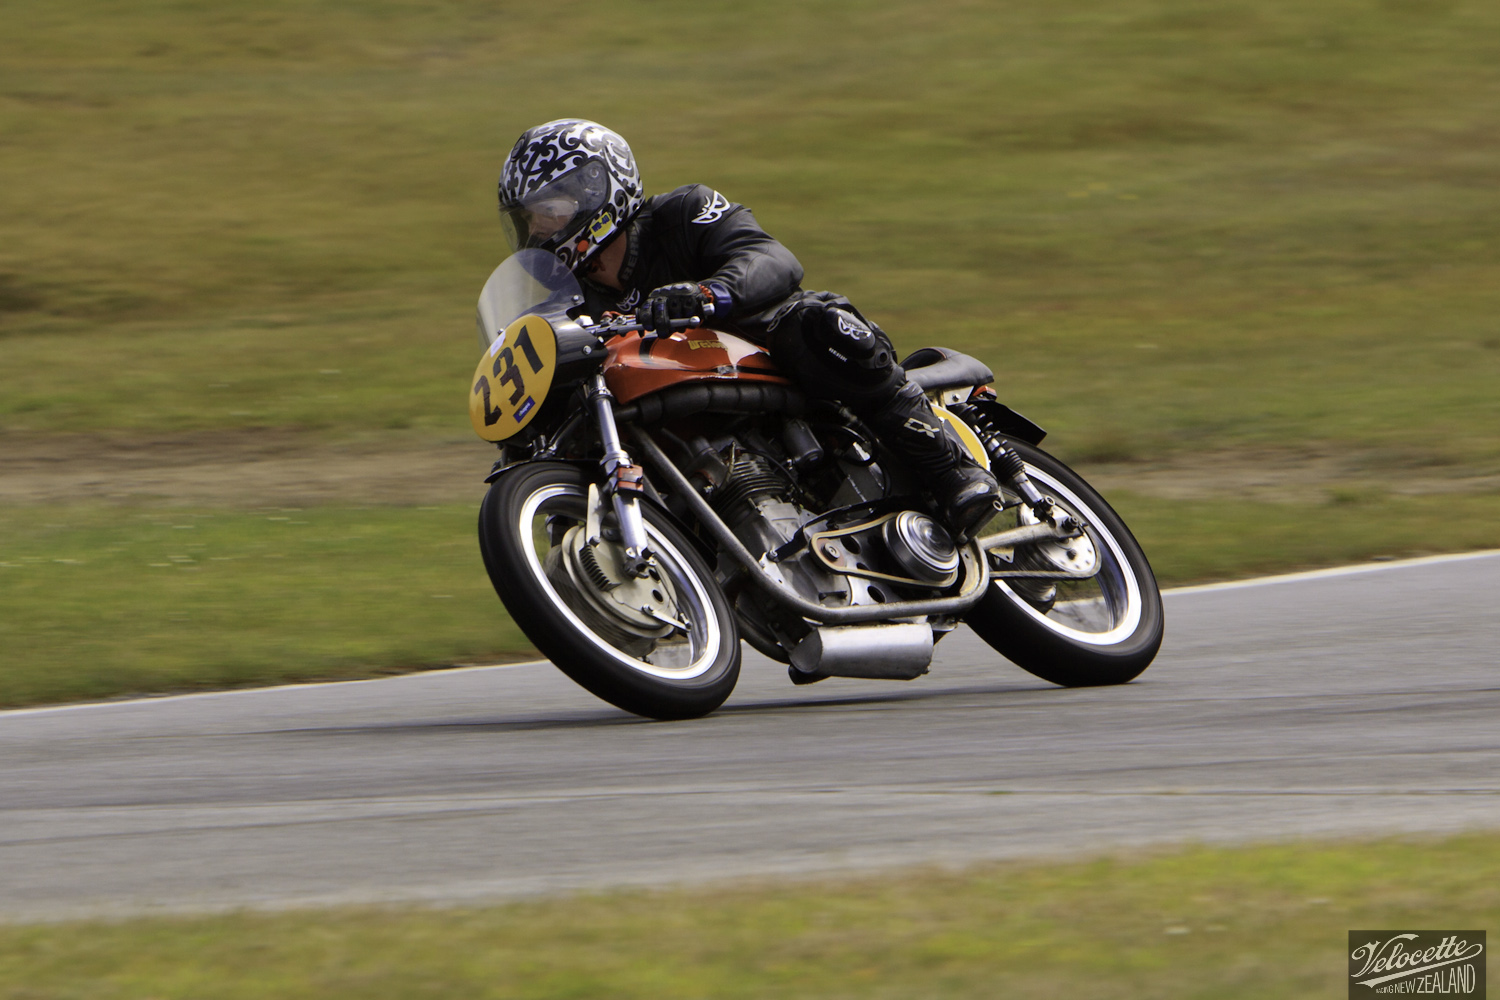 Burt Munro Challenge, Classic Motorcycle Racing, Cloud Craig-Smith, New Zealand, Post Classic Pre ’72, Rider 231, Teretonga Circuit races, Weston Weslake Norton Special 500